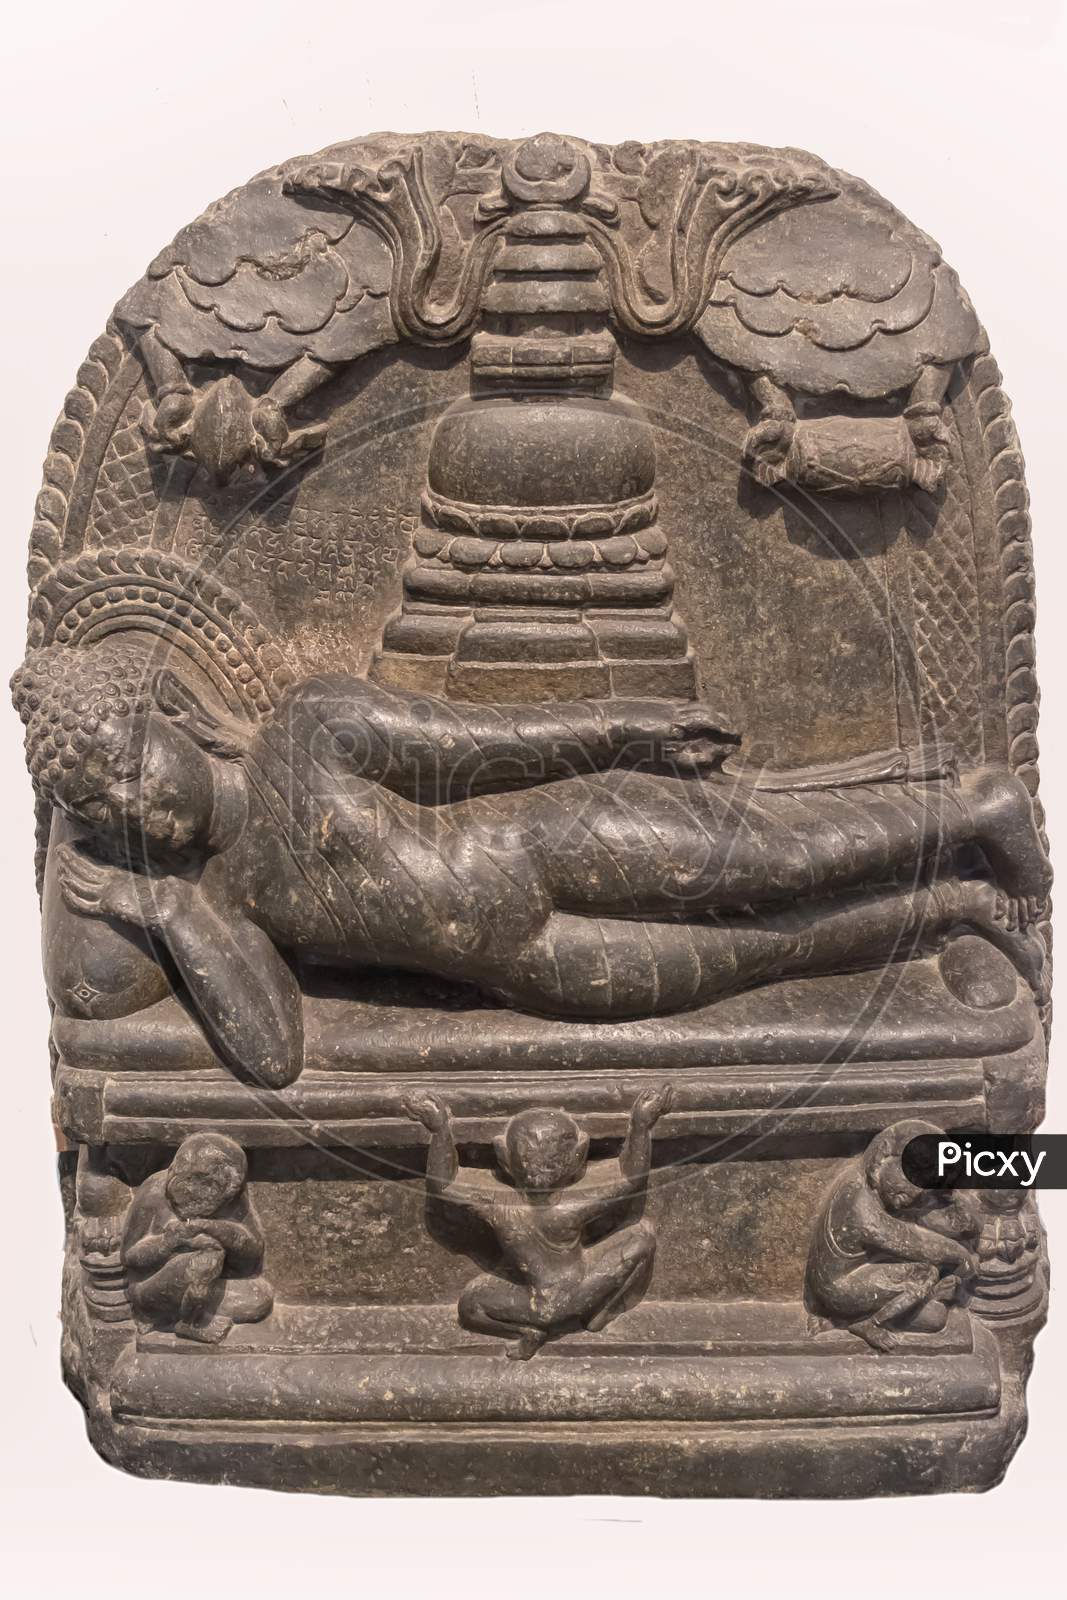 Archaeological Sculpture Of Mahaparinirvana From Indian Mythology